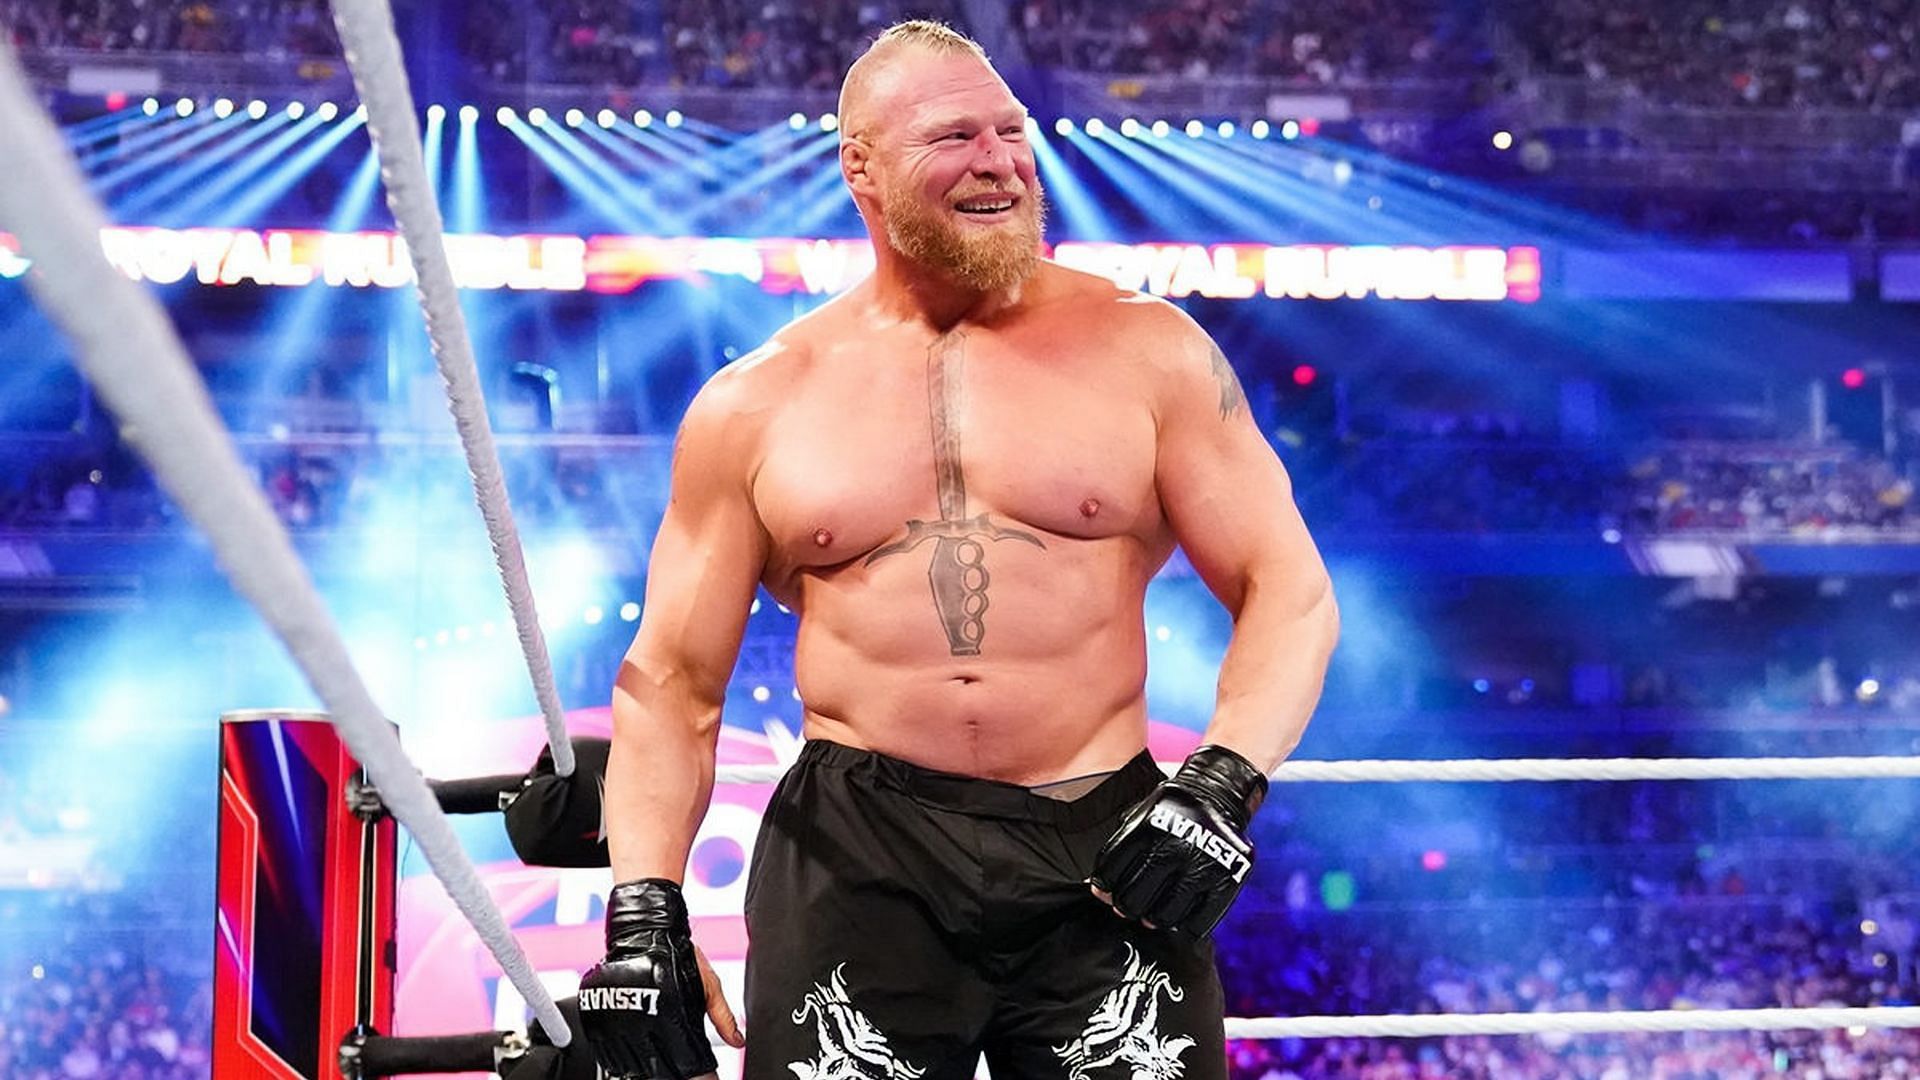 Brock Lesnar at WWE Royal Rumble 2022